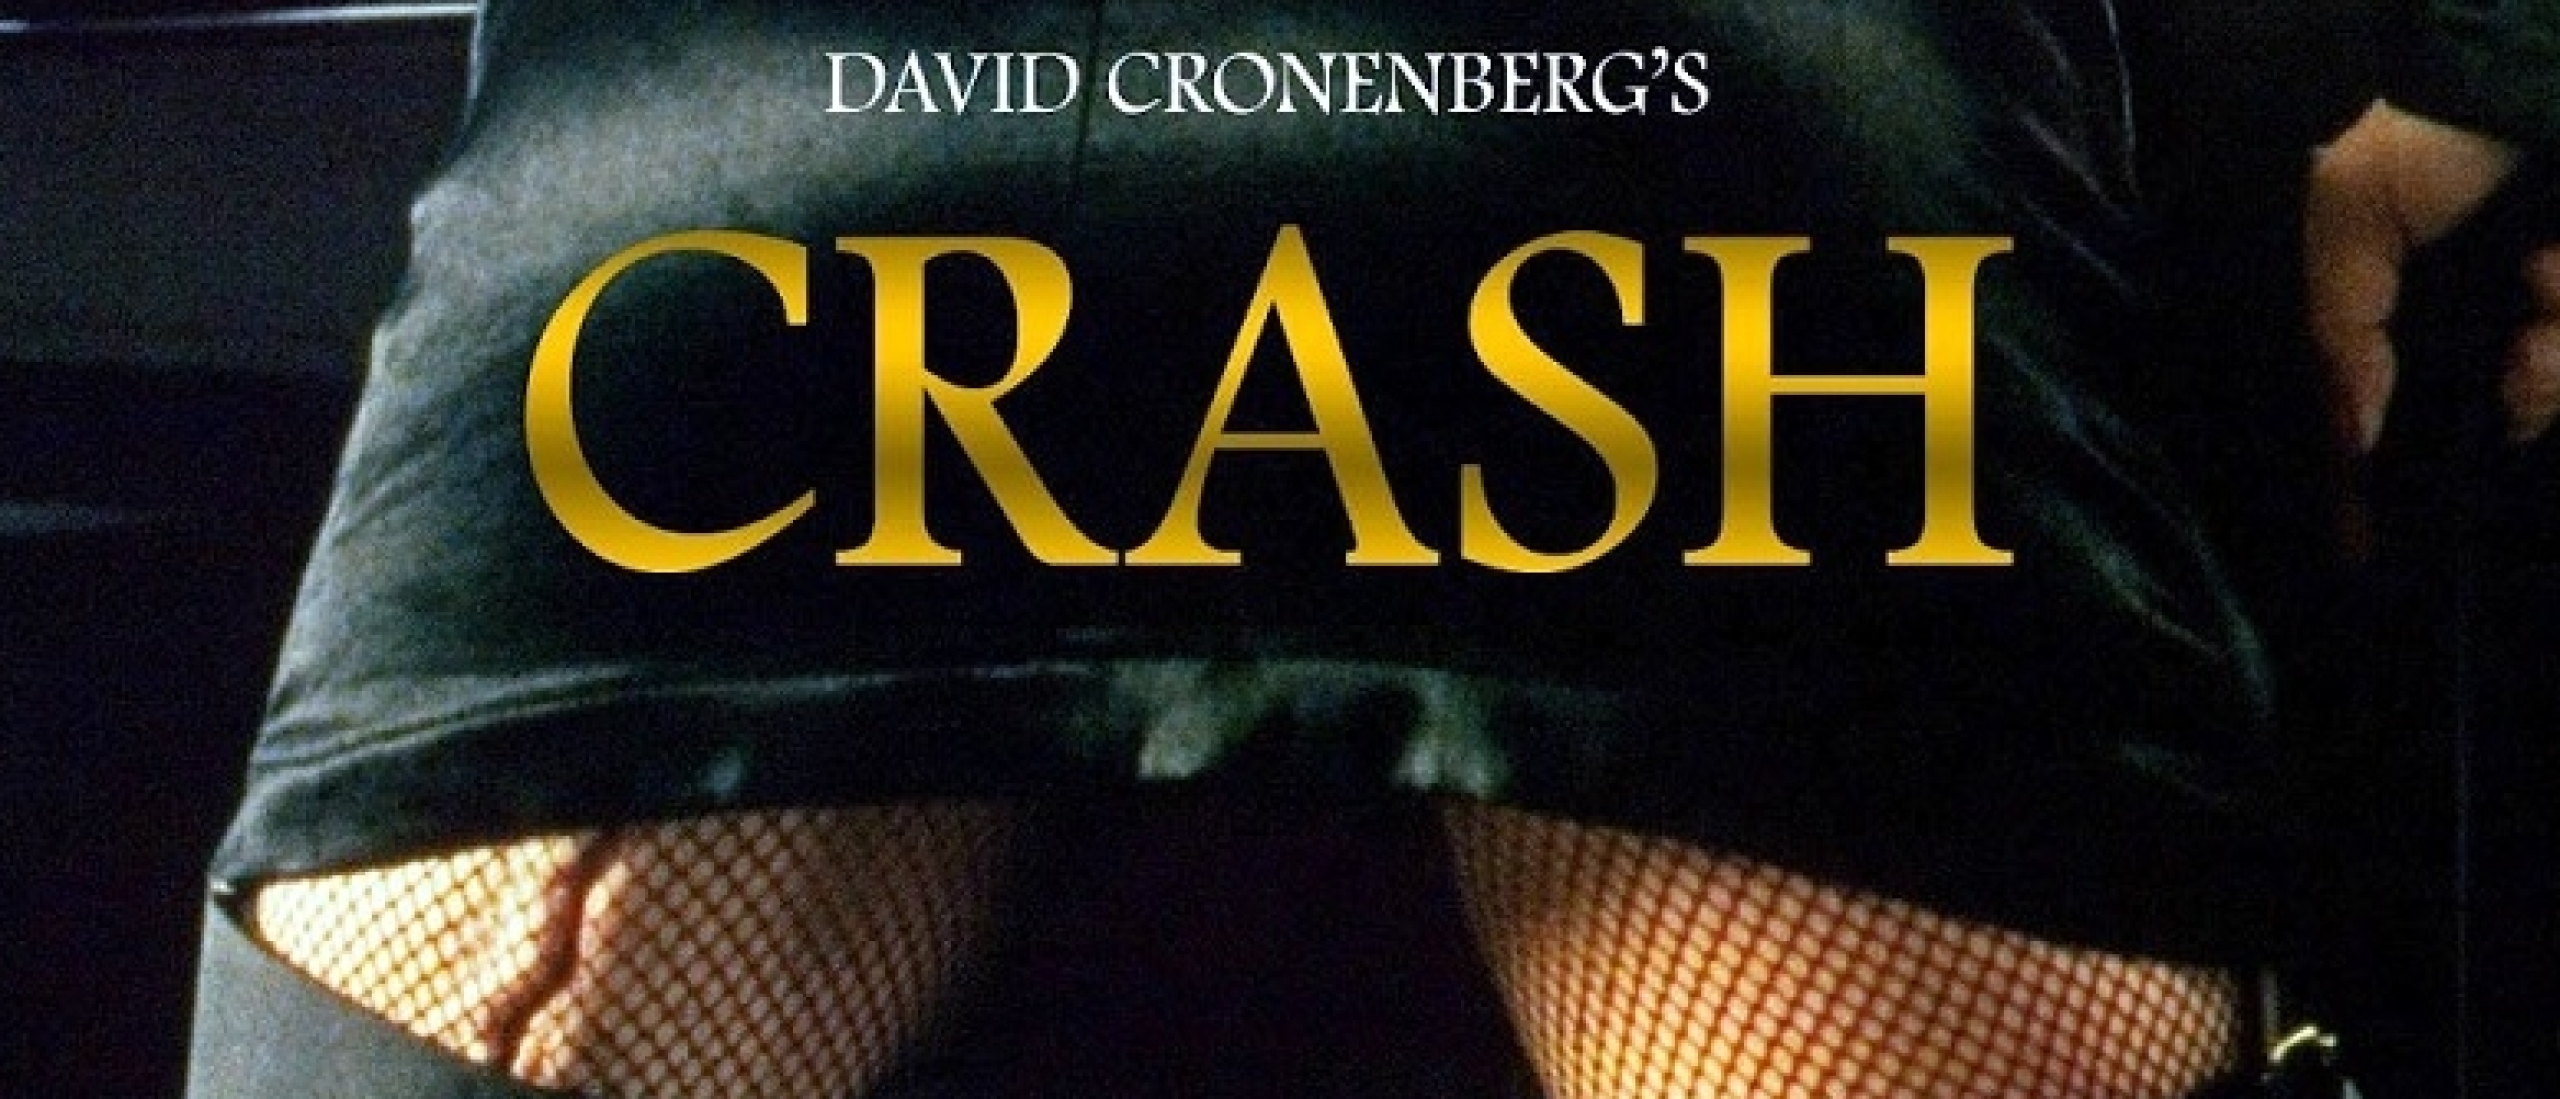 The Scandalous Erotica In the Film Crash, By David Cronenberg